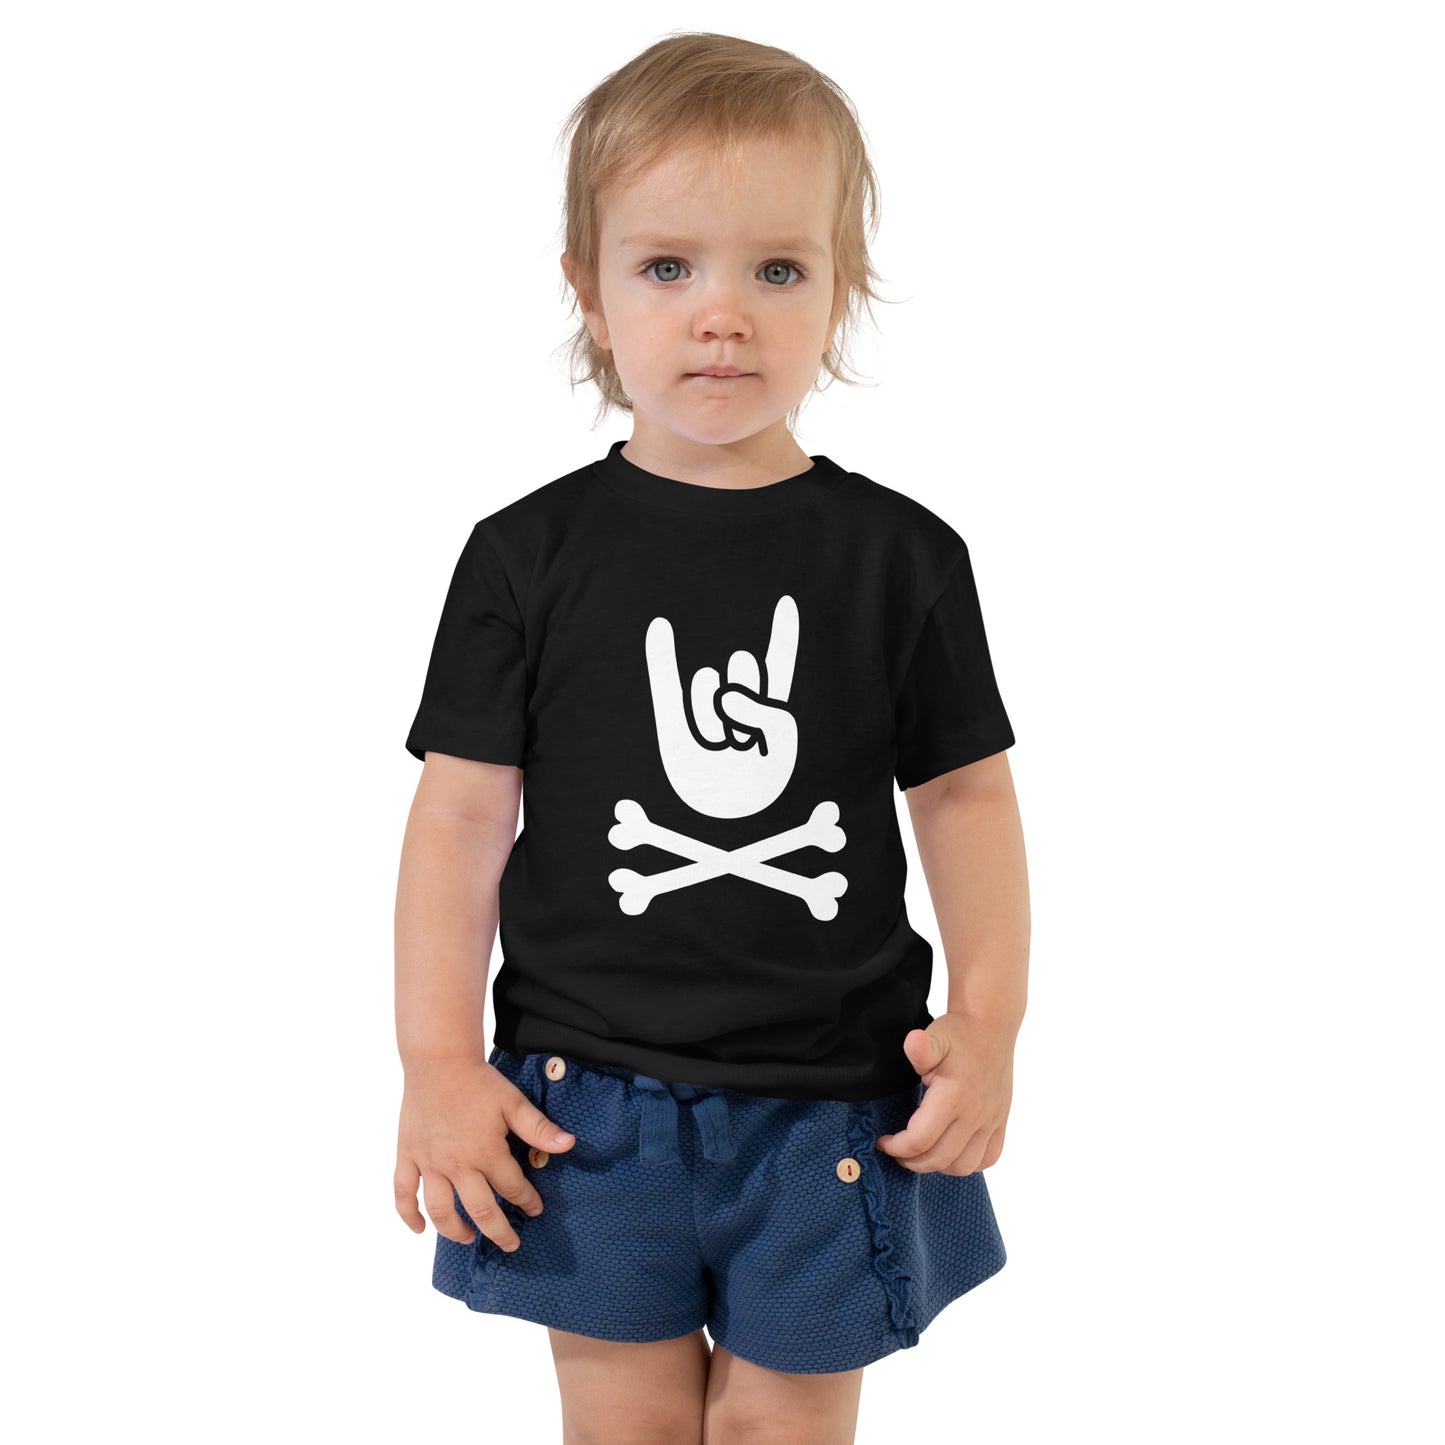 Big hand to ROCKNROLL Toddler Short Sleeve Black T-Shirt